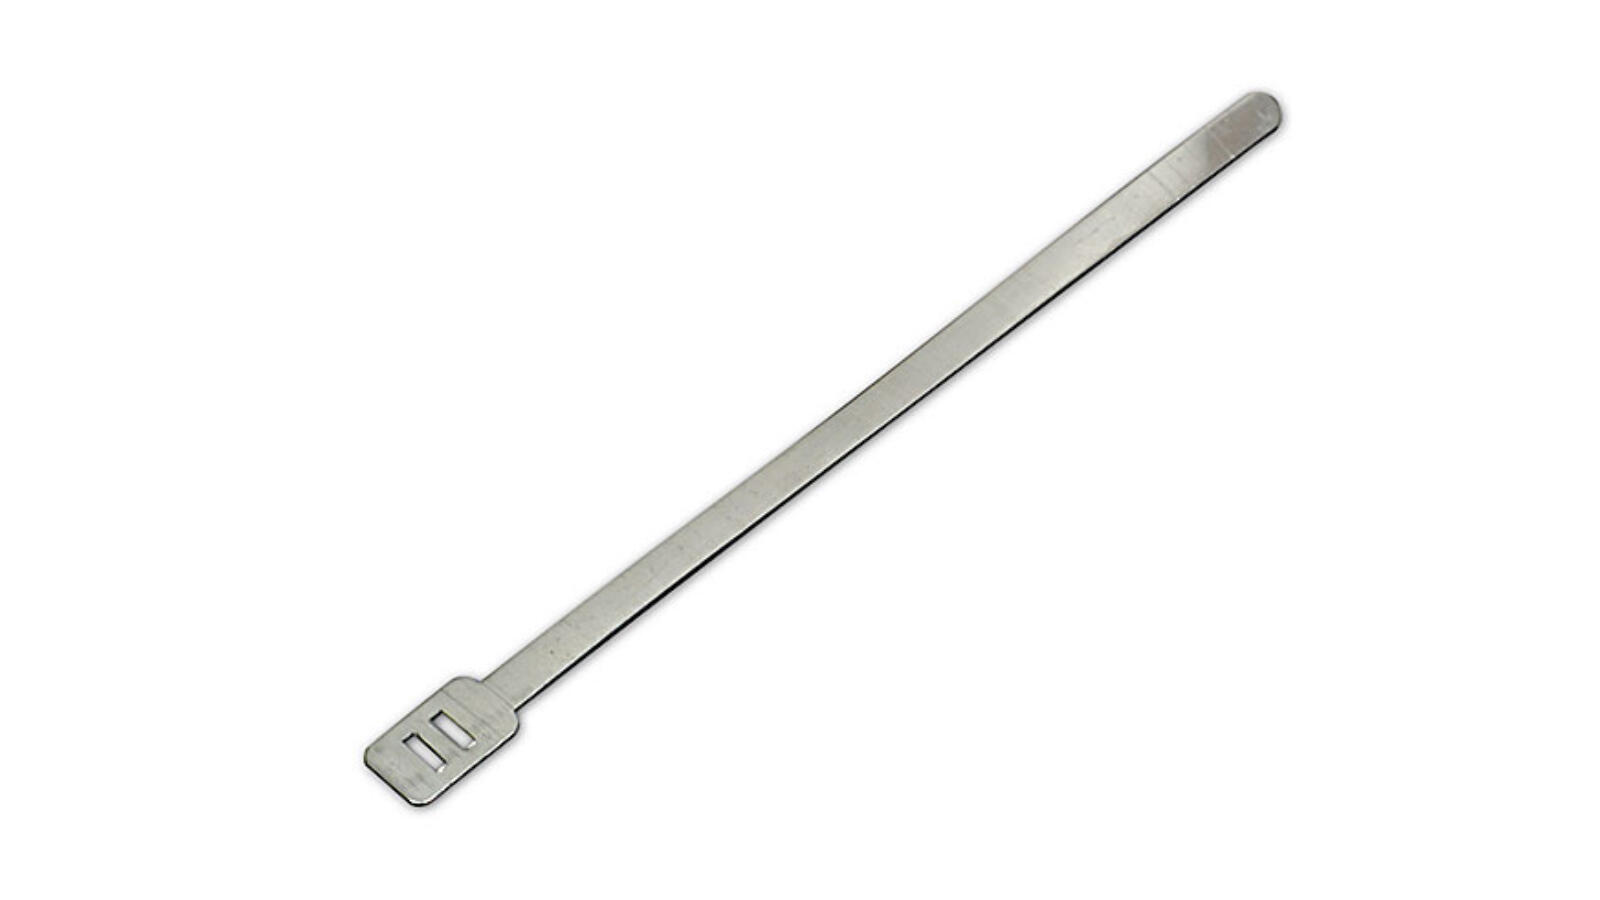 Kabelbinder Aluminium 165mm lang, 6mm breit, 0,5mm dick, 2,88 €